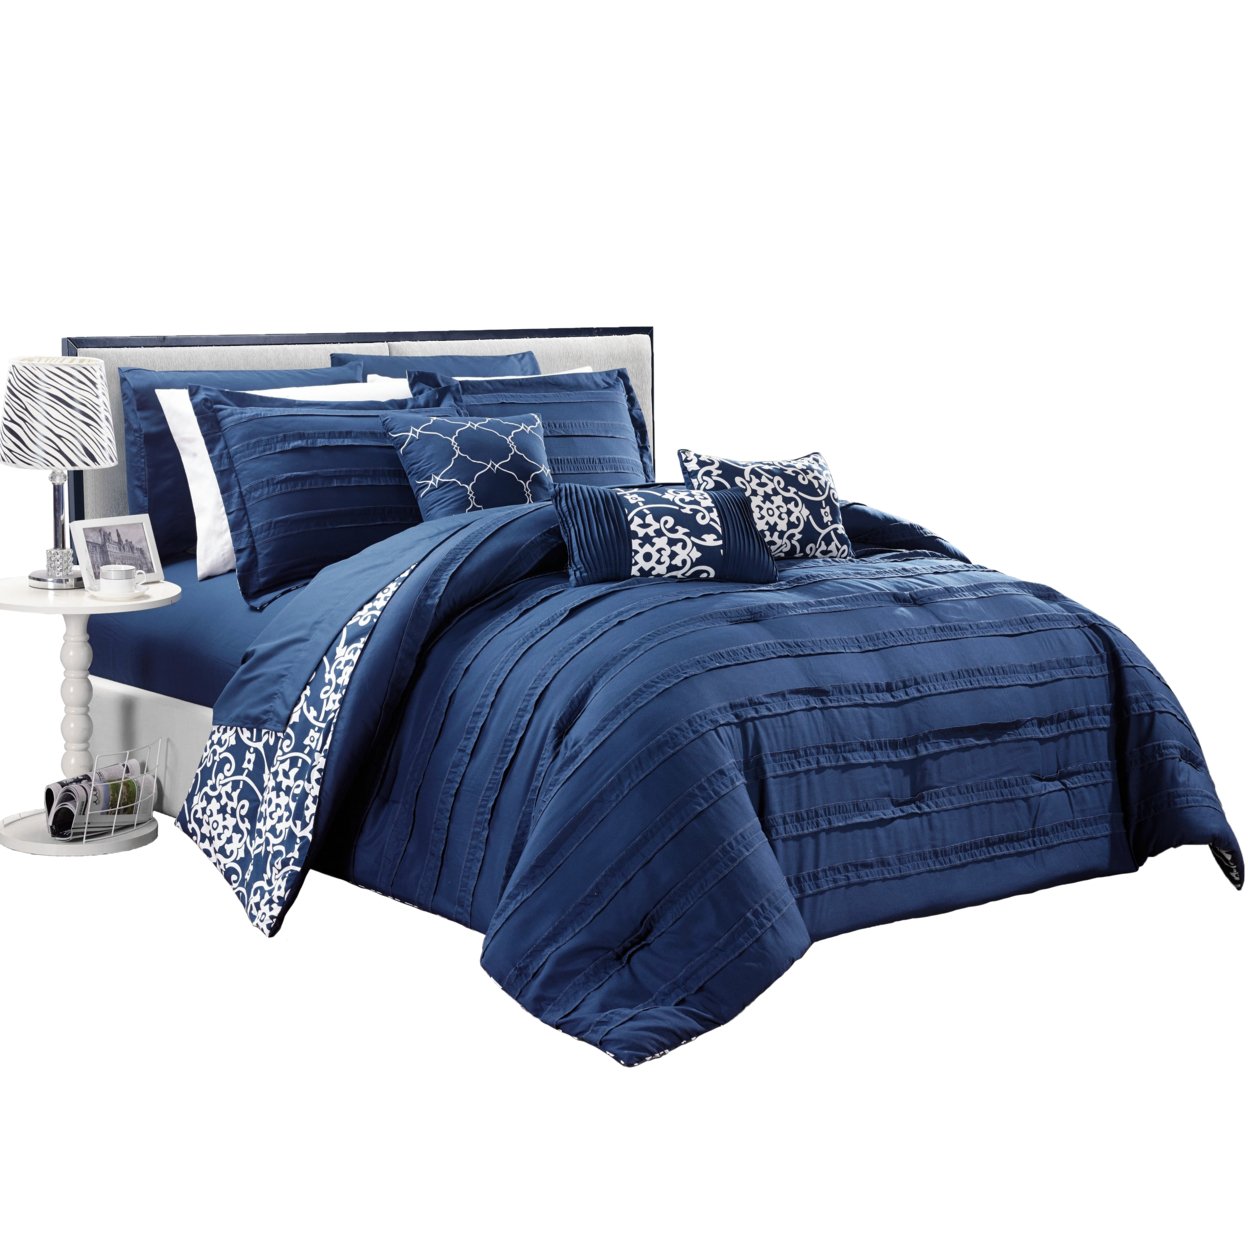 10-Piece Reversible Bed In A Bag Comforter & Sheet Set, Multiple Colors - Aqua, King